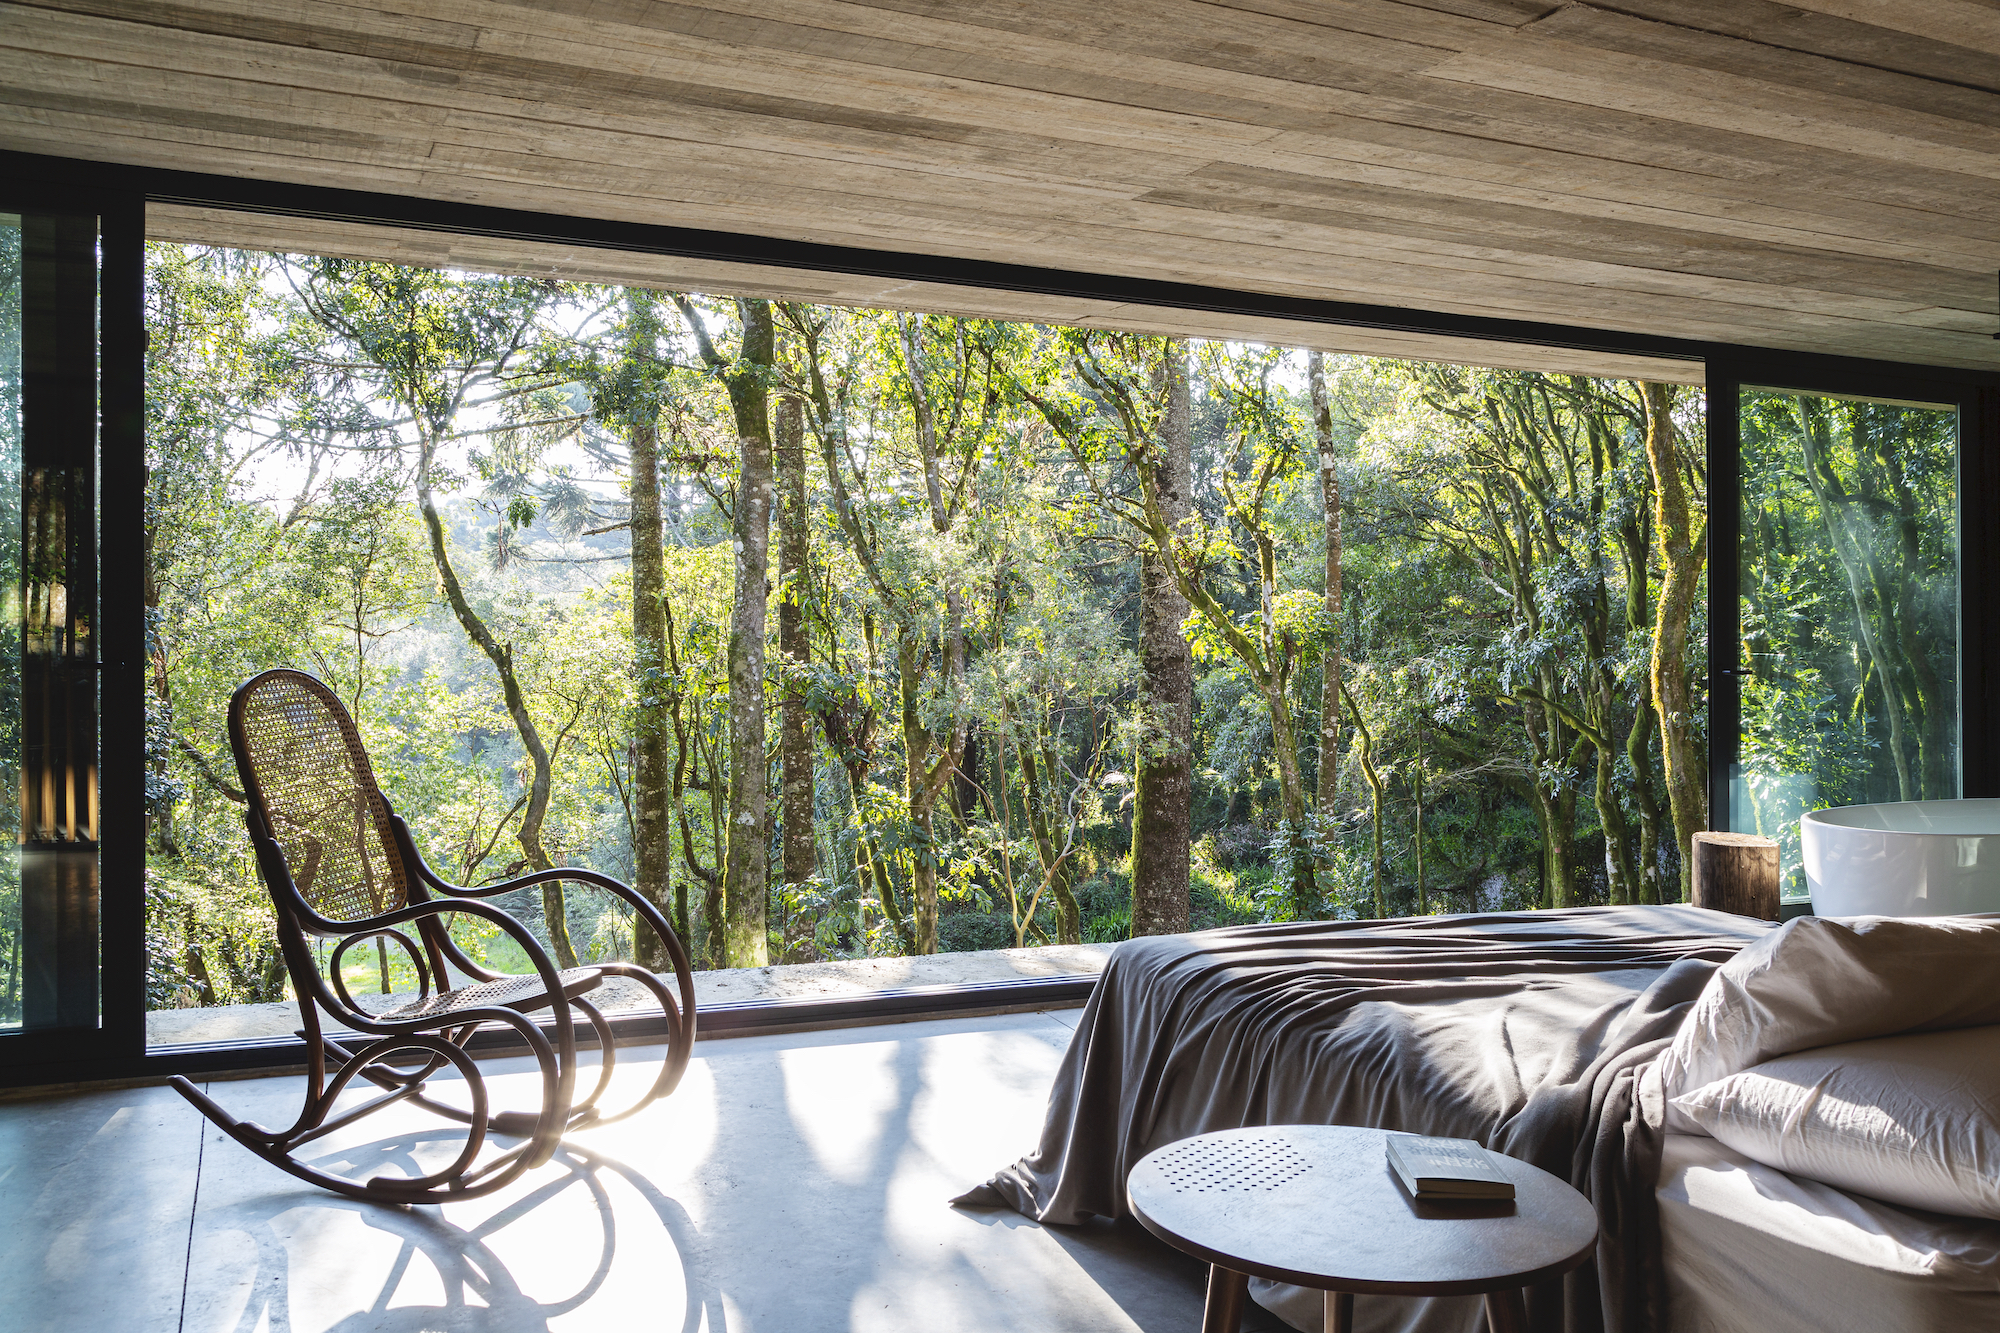 Fortunata House was designed by Brazilian architect Luciano Lerner Bass - Effect Magazine